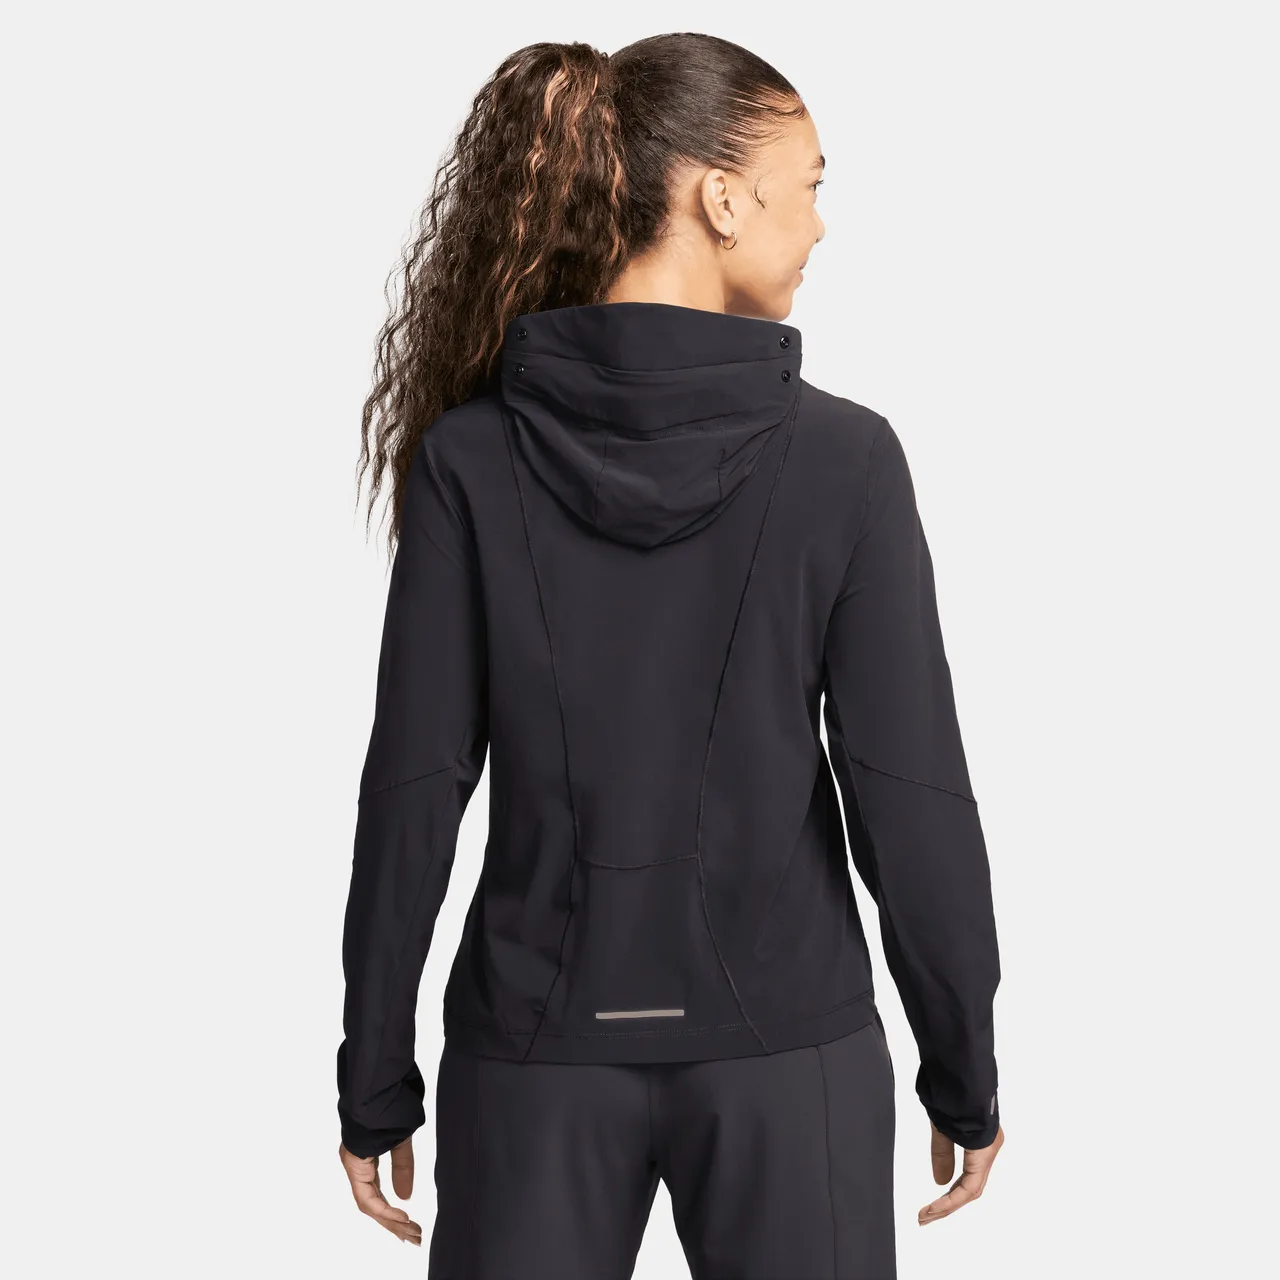 Nike Swift UV hardloopjack voor dames - Zwart